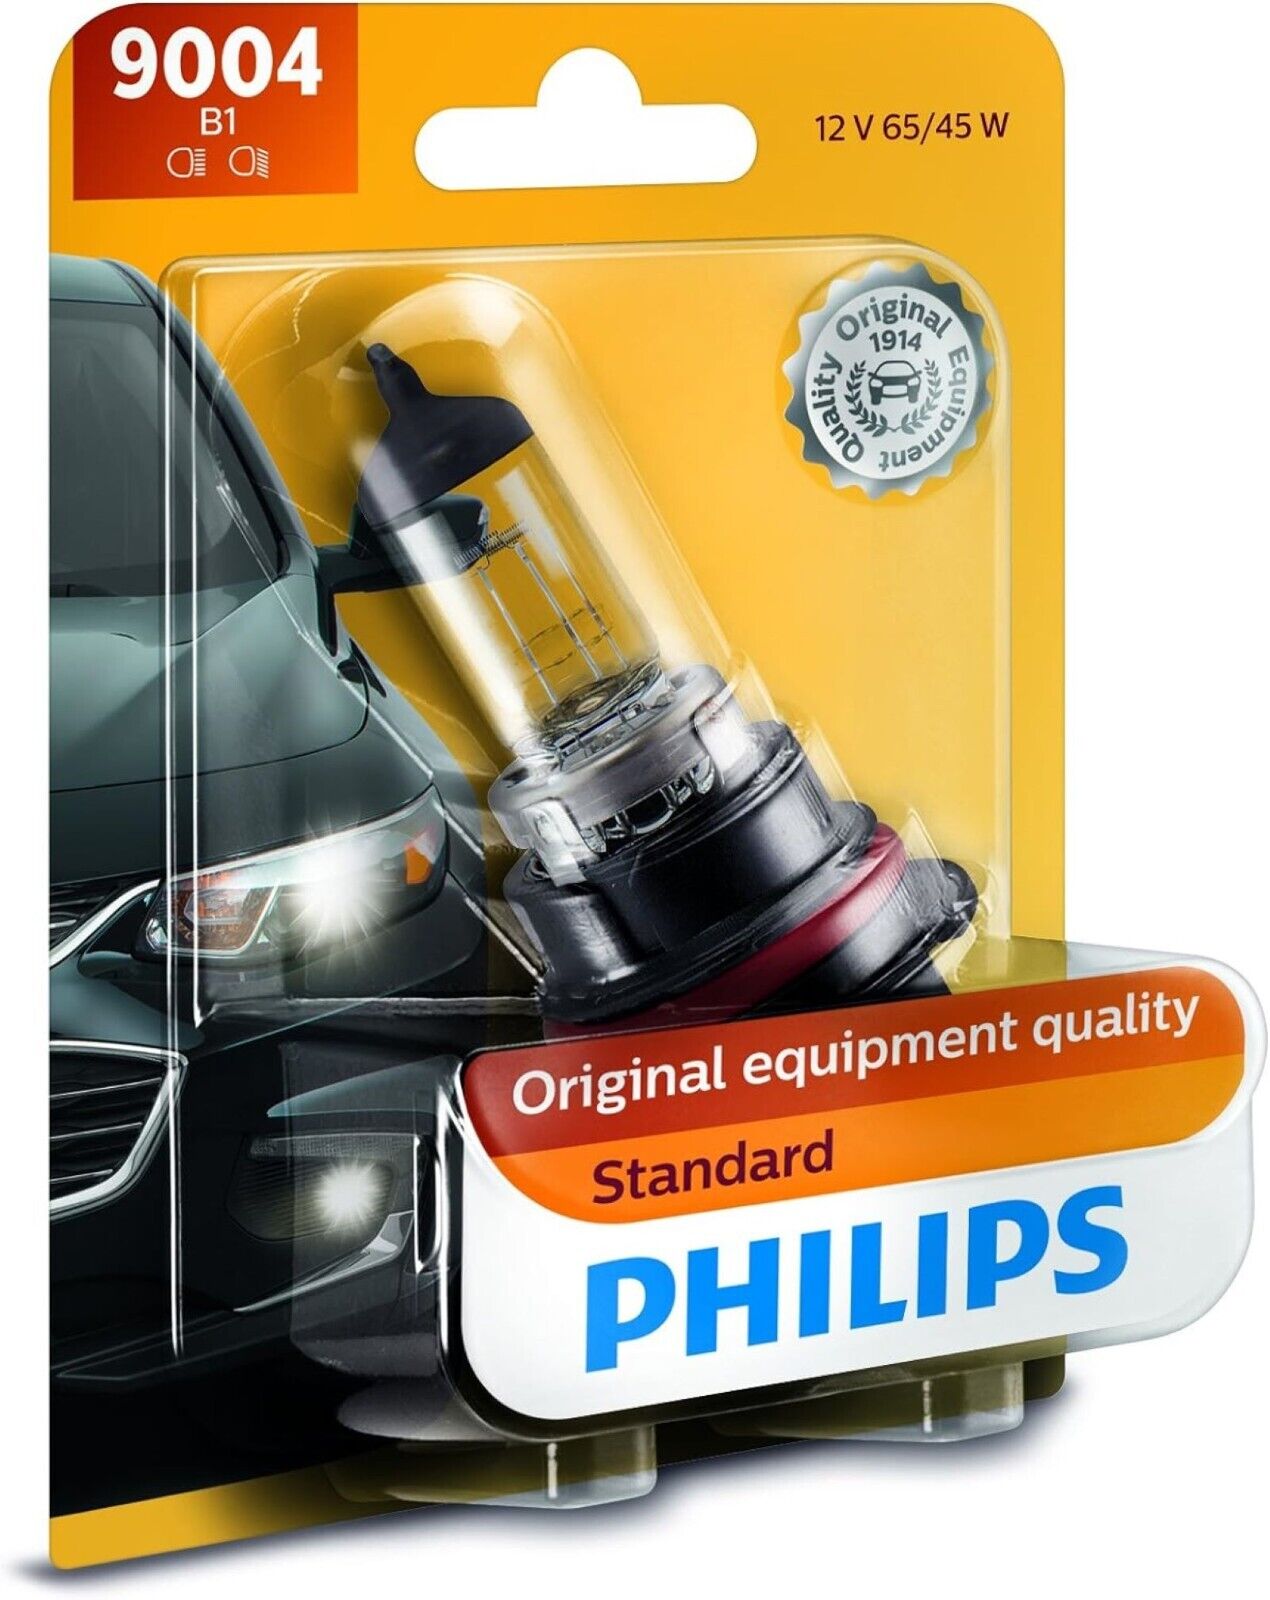 Philips Headlight Bulbs - Genuine Parts - Varied Sizes - Brand NEW